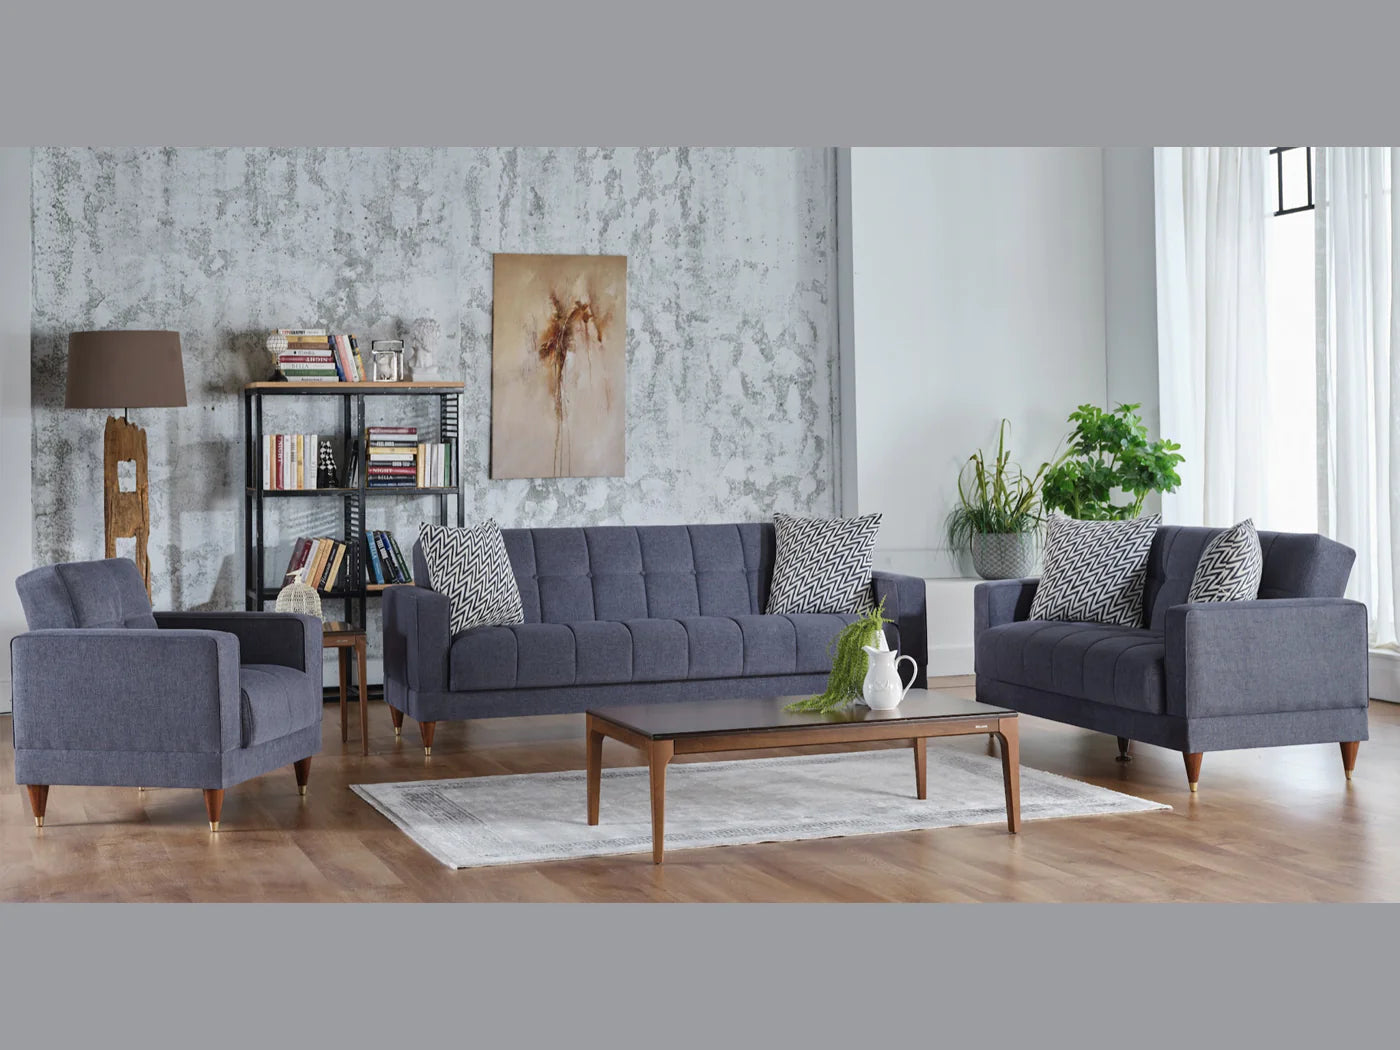 Camilla 3 Seat Sleeper - Home Store Furniture